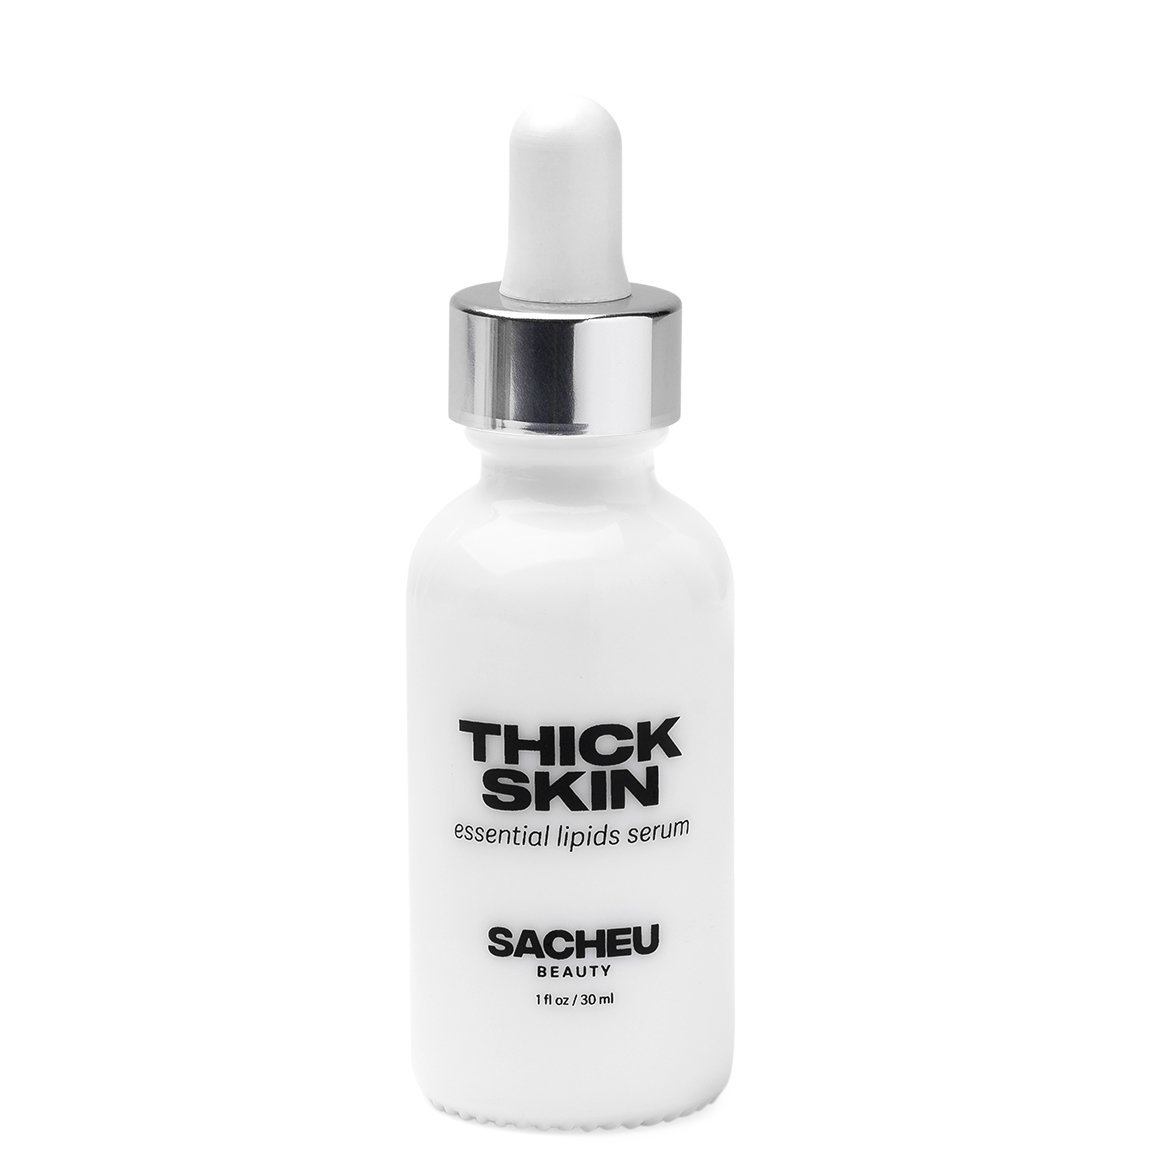 SACHEU Beauty Thick Skin alternative view 1 - product swatch.